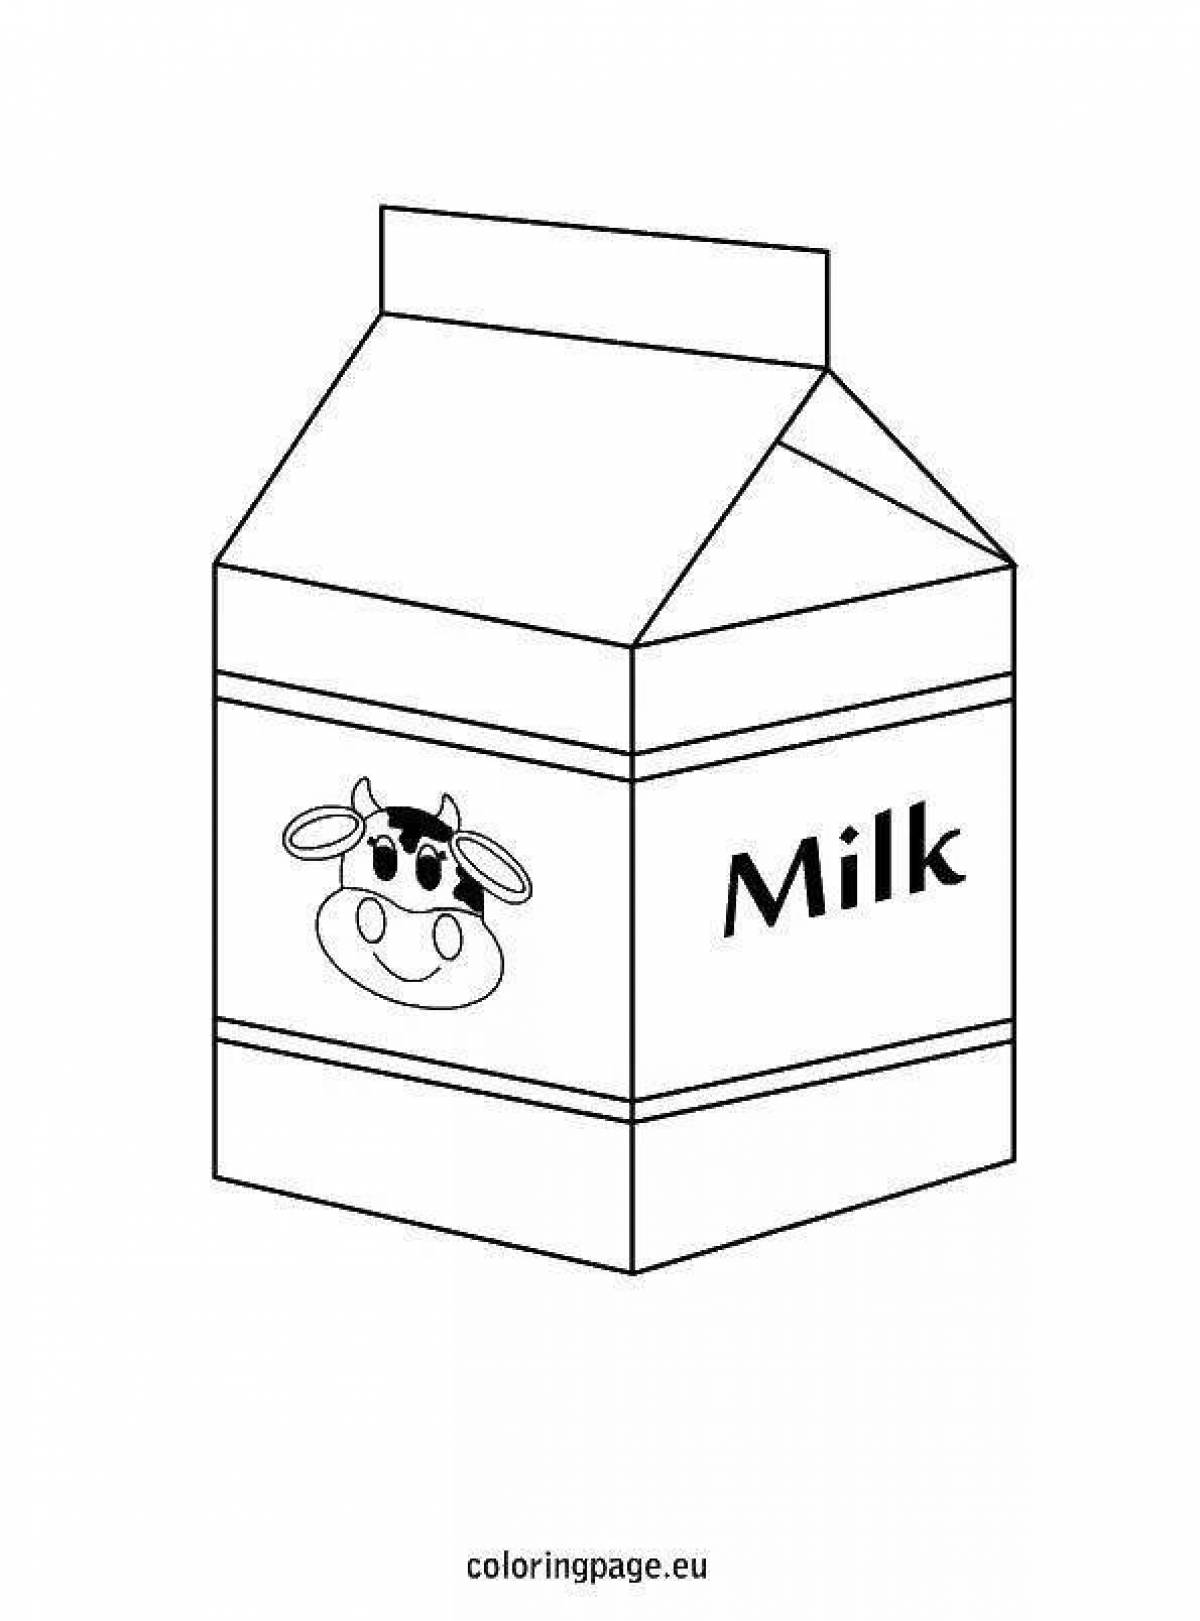 Развлекательная молочная раскраска для малышей